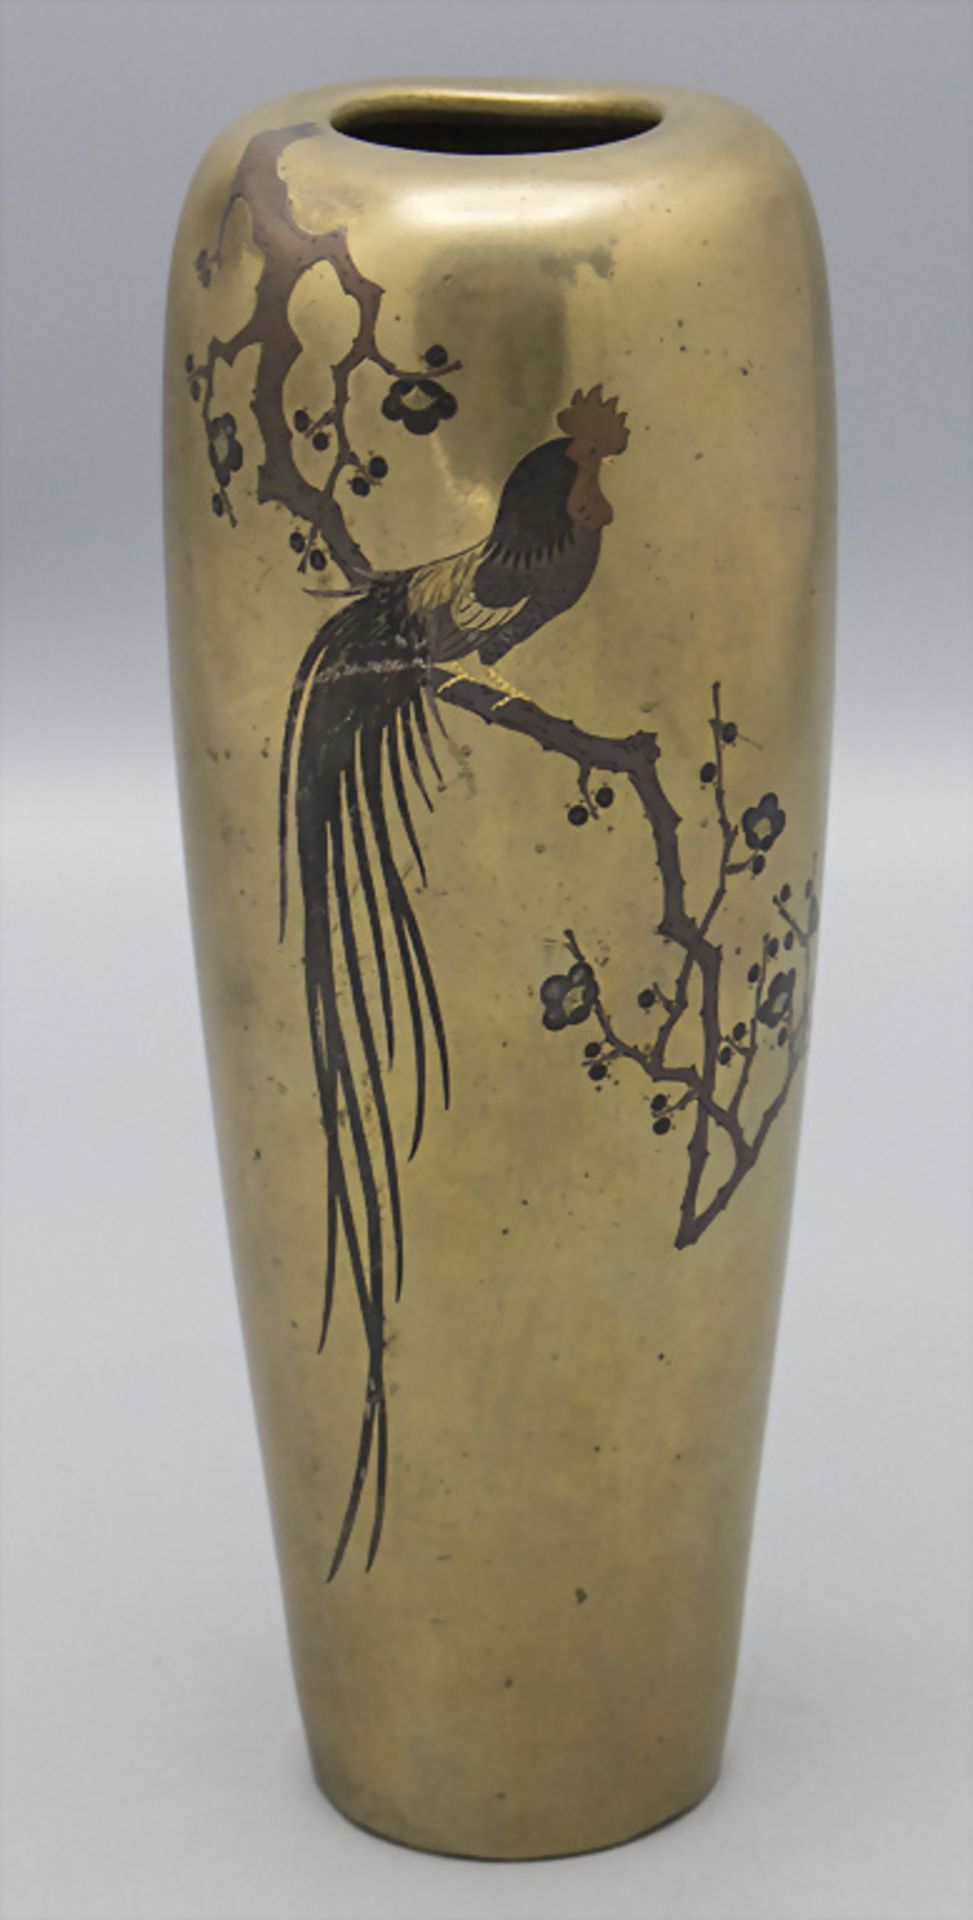 Ziervase / A decorative vase, Japan, Meiji-Periode (1852-1912), um 1900